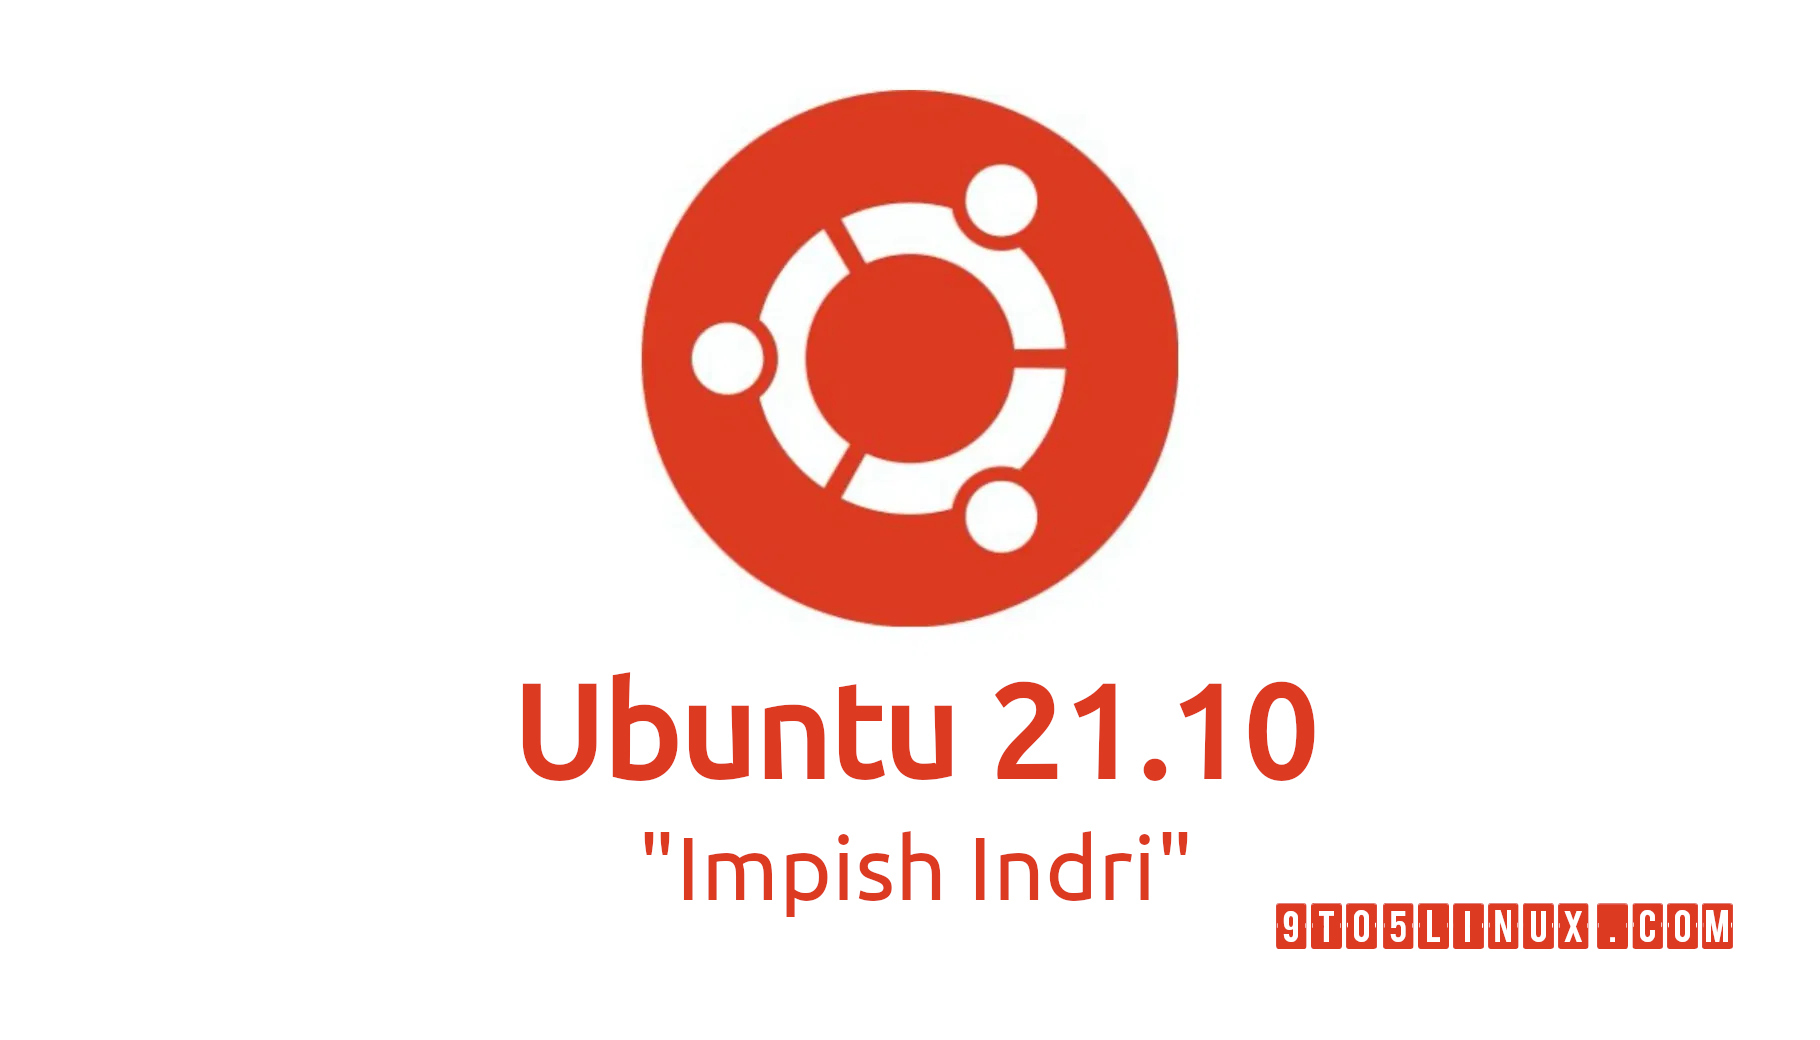 Ubuntu 21.10 “Impish Indri” Is Slated for Release on October 14th, 2021